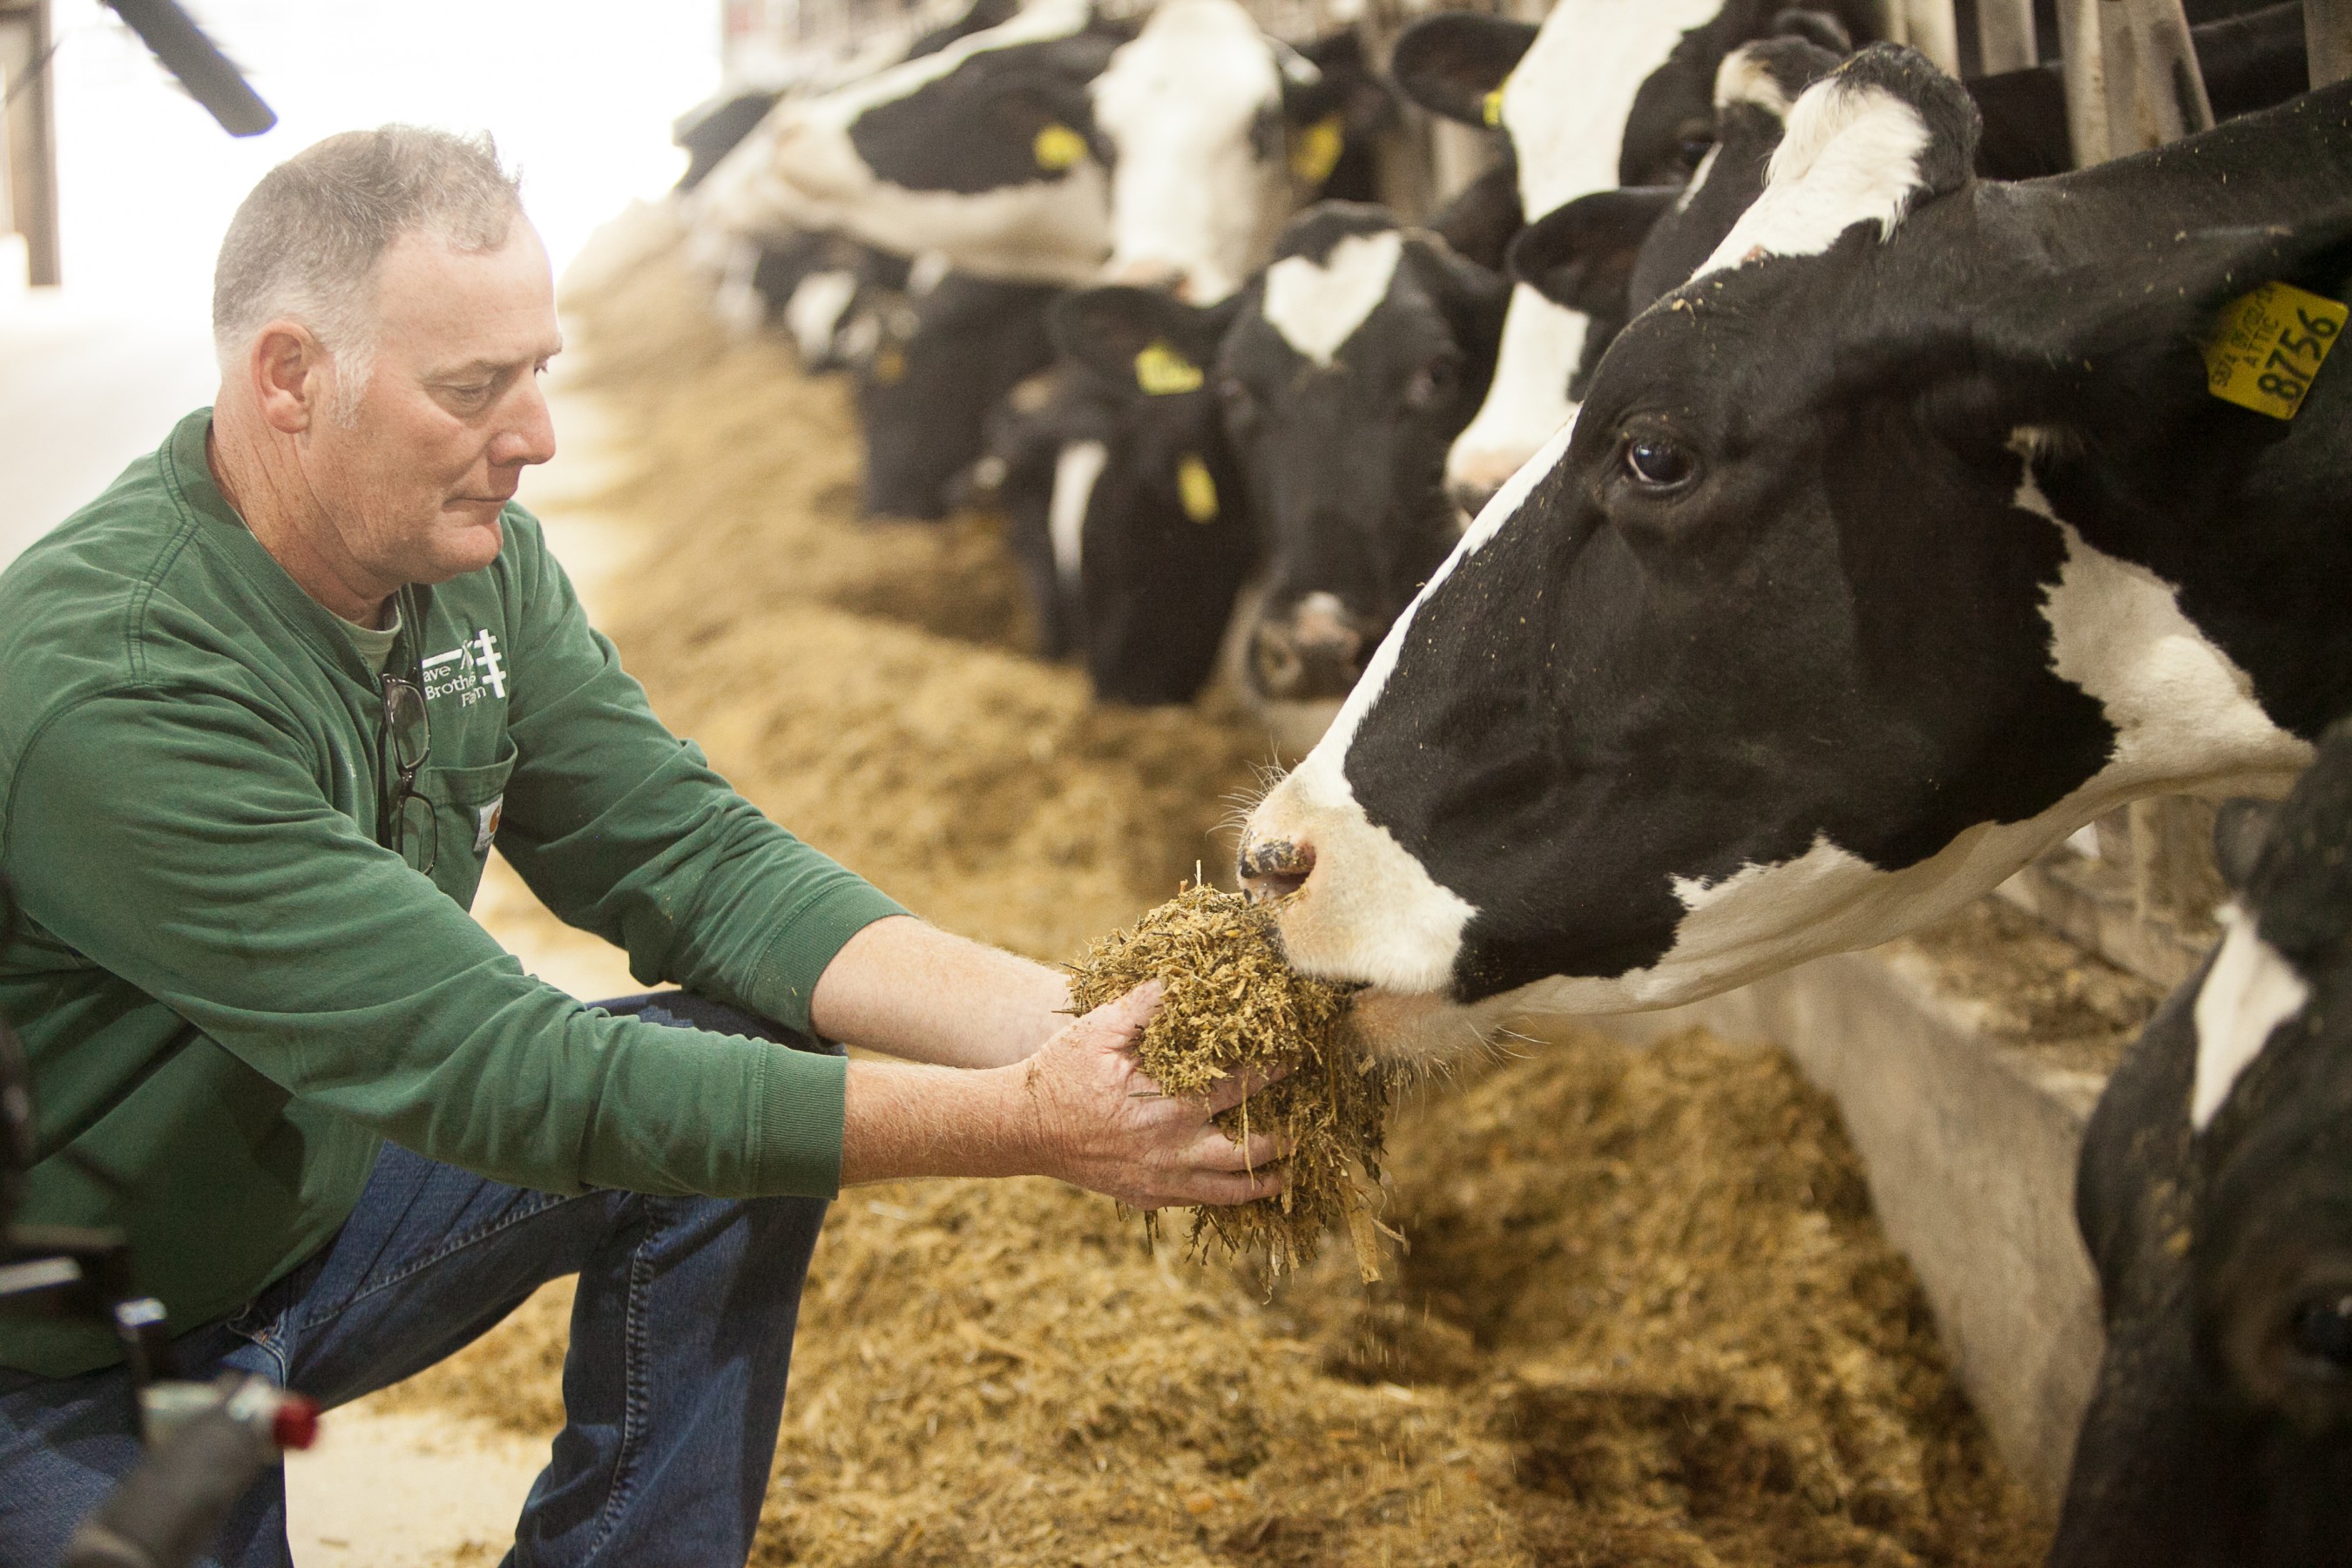 U.S. Dairy Advances Journey to Net Zero Carbon Emissions by 2050